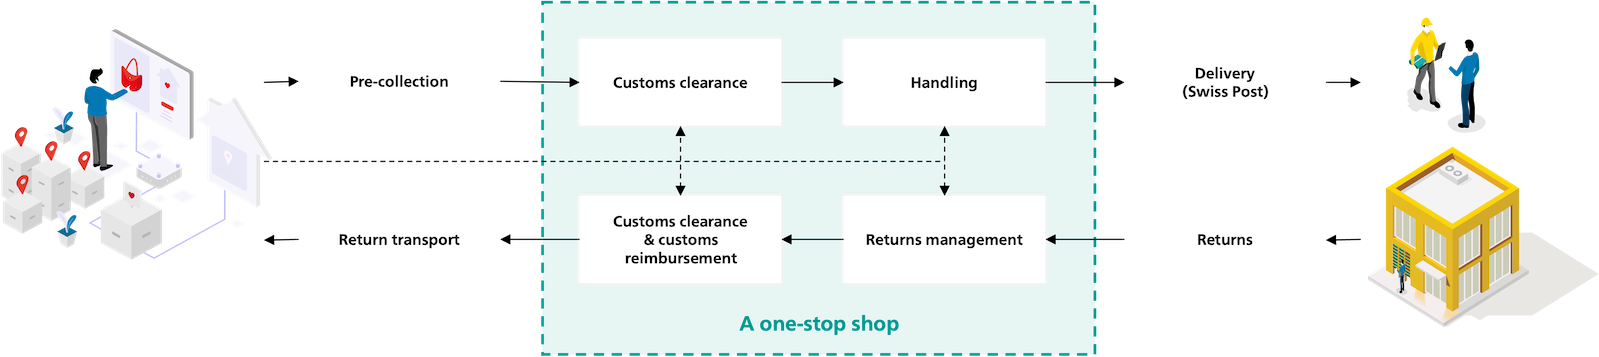 Returns management e-commerce